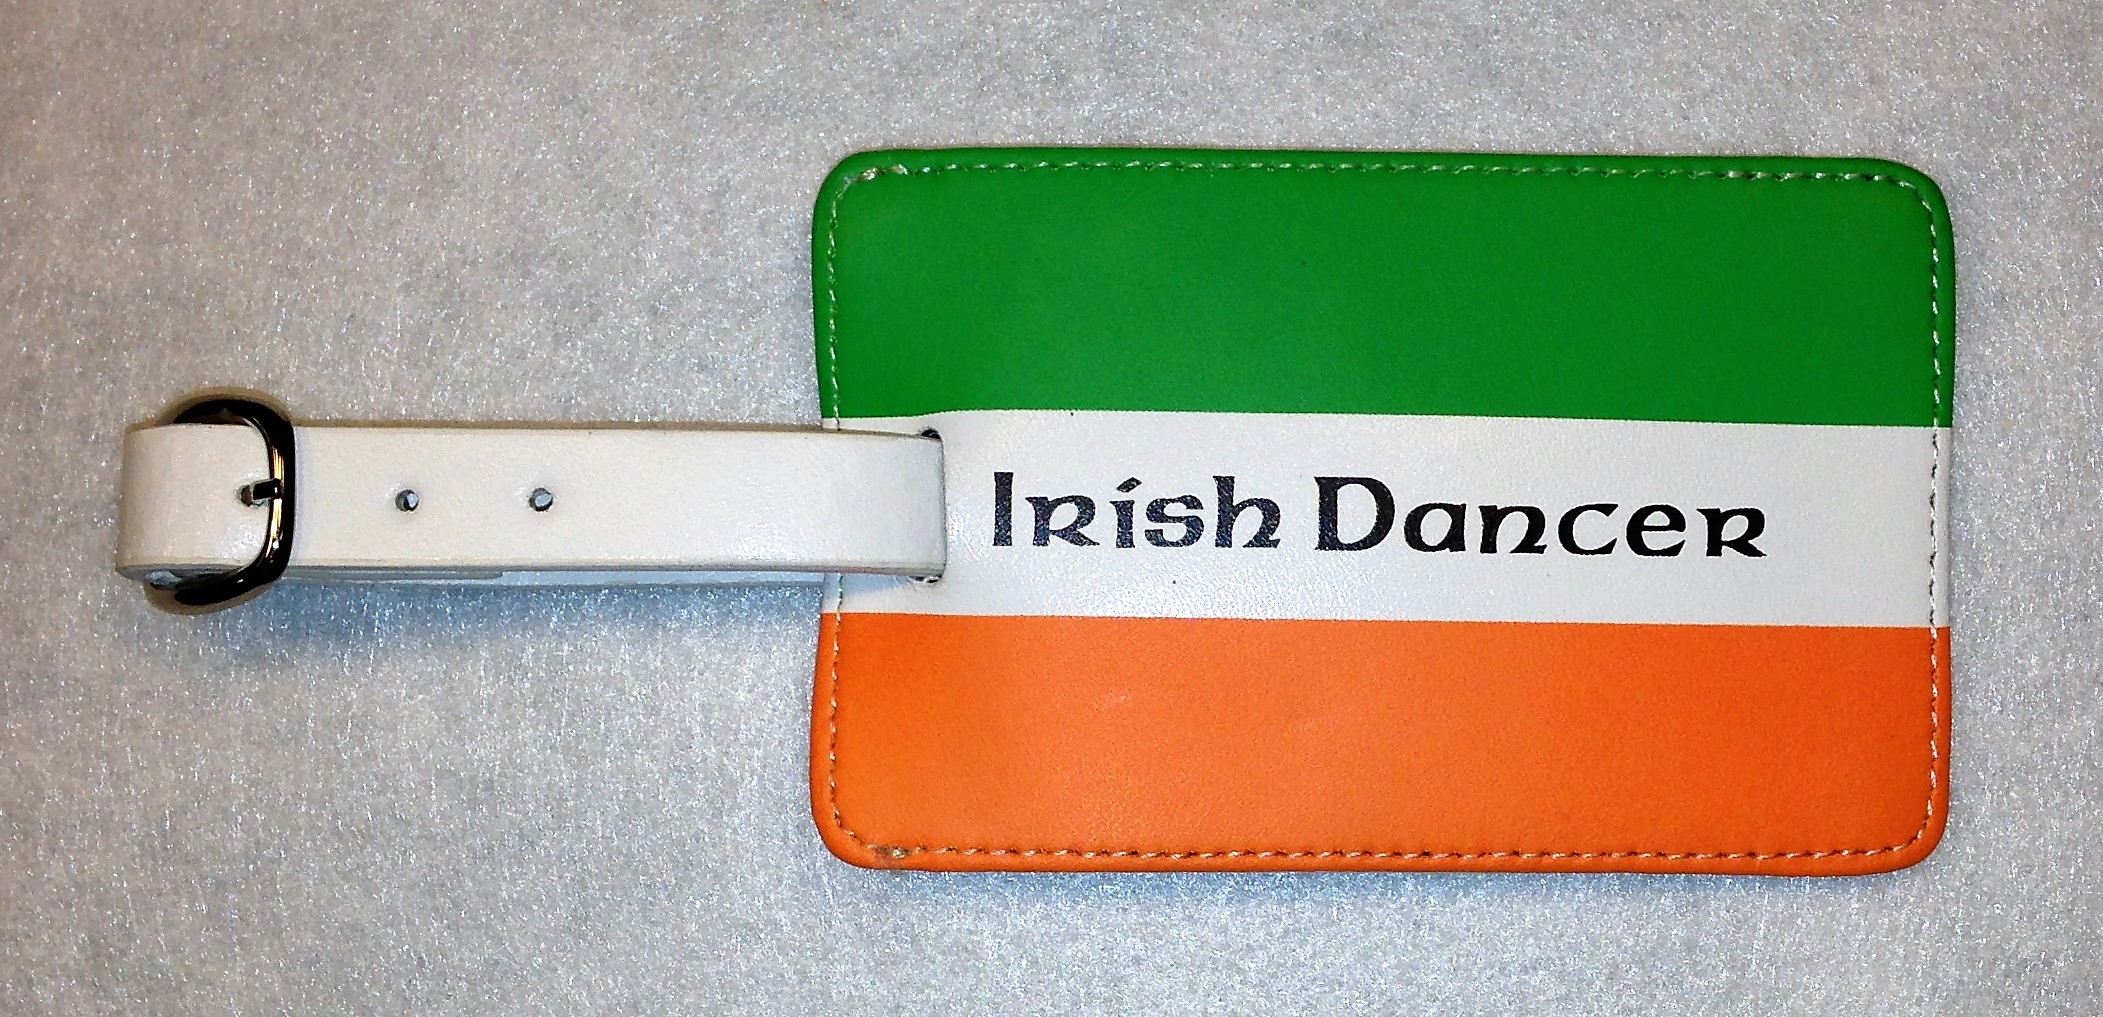 Irish Dancer Luggage Tag